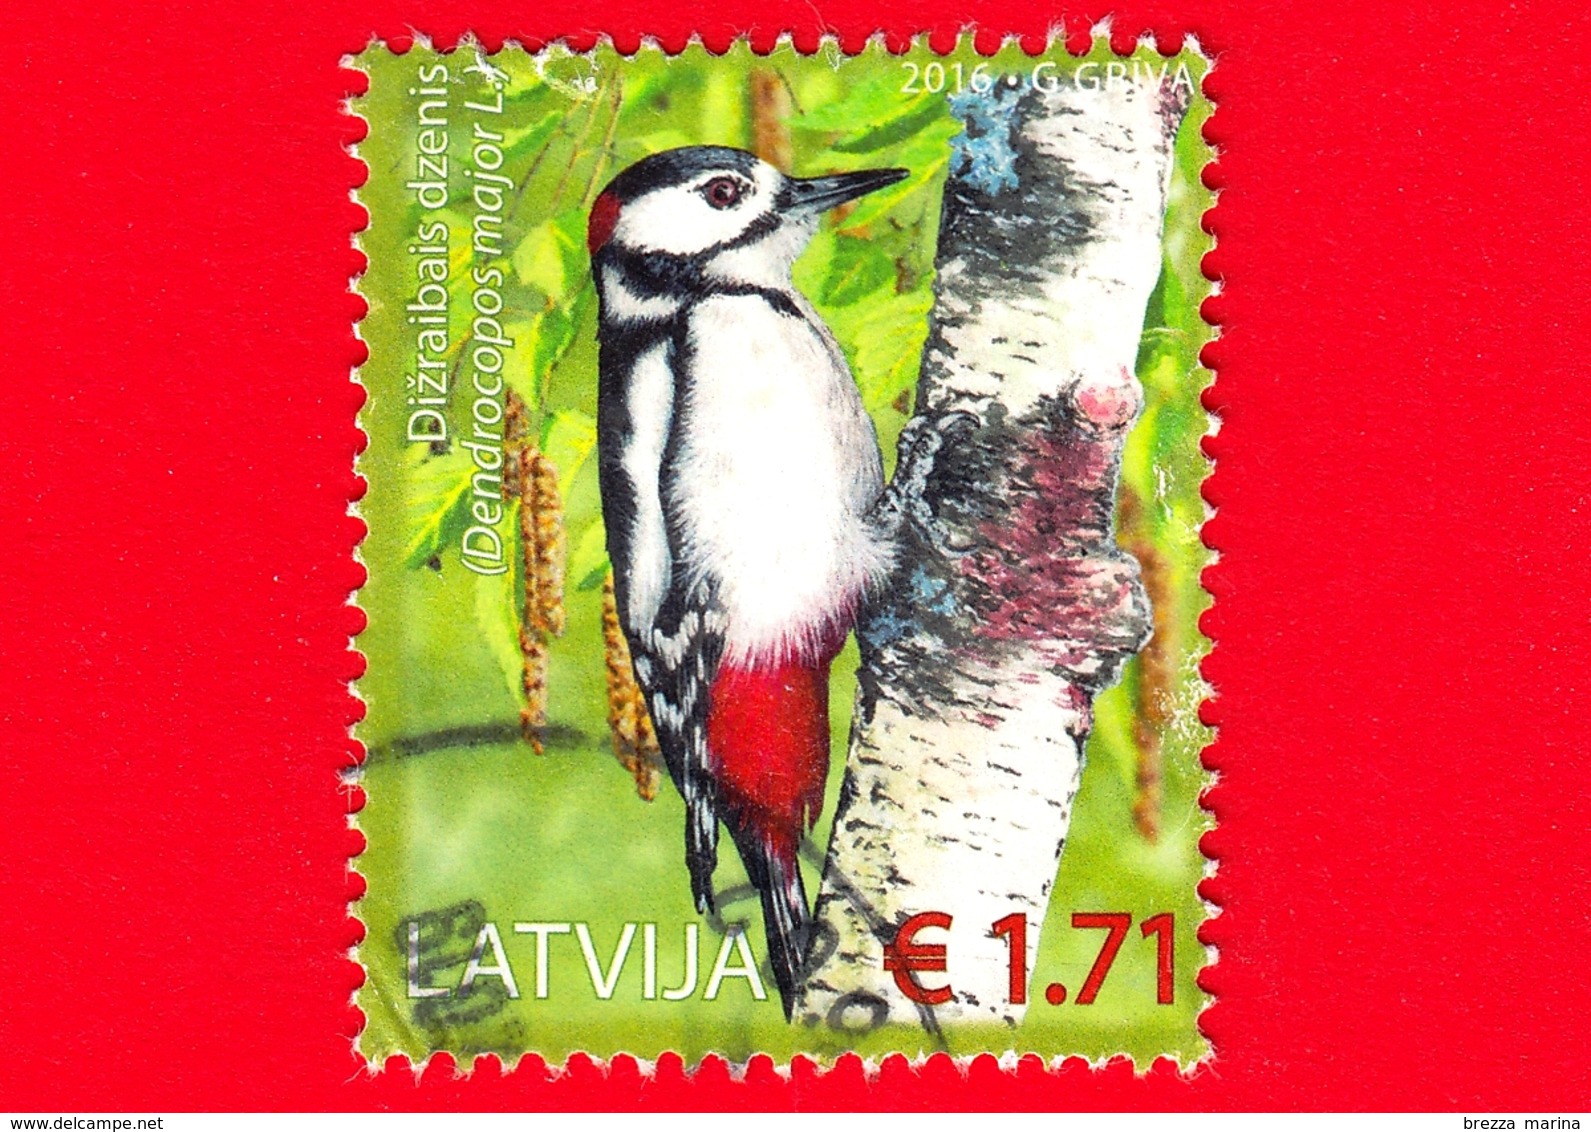 LETTONIA - LATVIJA - Usato - 2016 - Uccelli - Picchio - Great Spotted Woodpecker (Dendrocopos Major) - 1.71 - Latvia